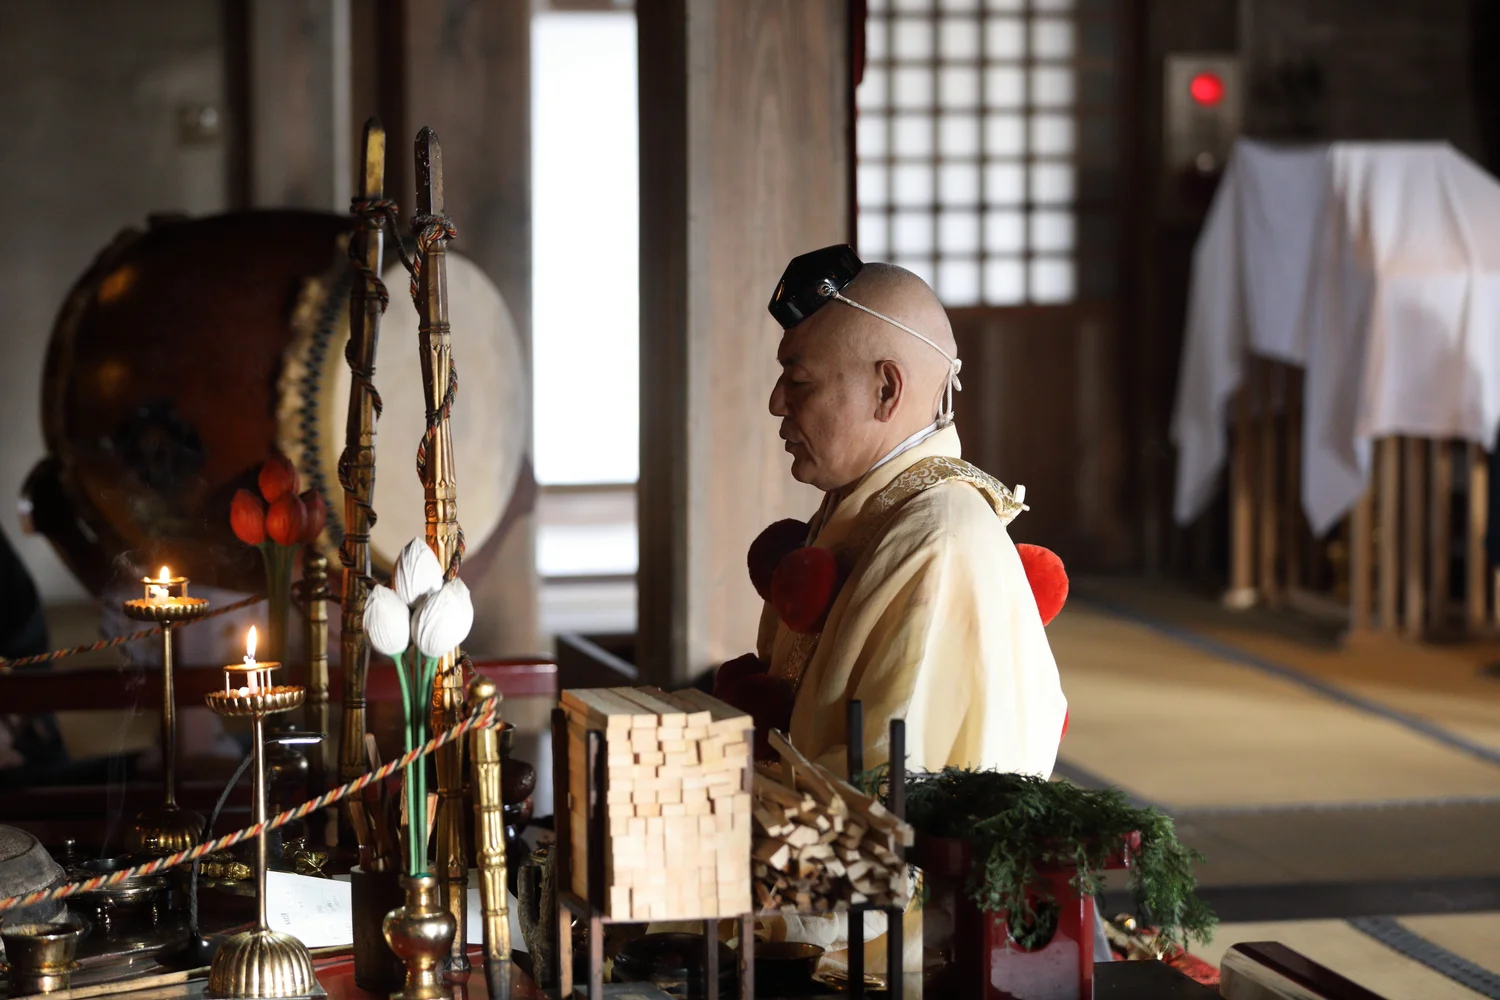 Experience Shugyo Training and Matcha with Sweets at Sakuramoto-bo Temple at Yoshino-Omine, a World Heritage Site